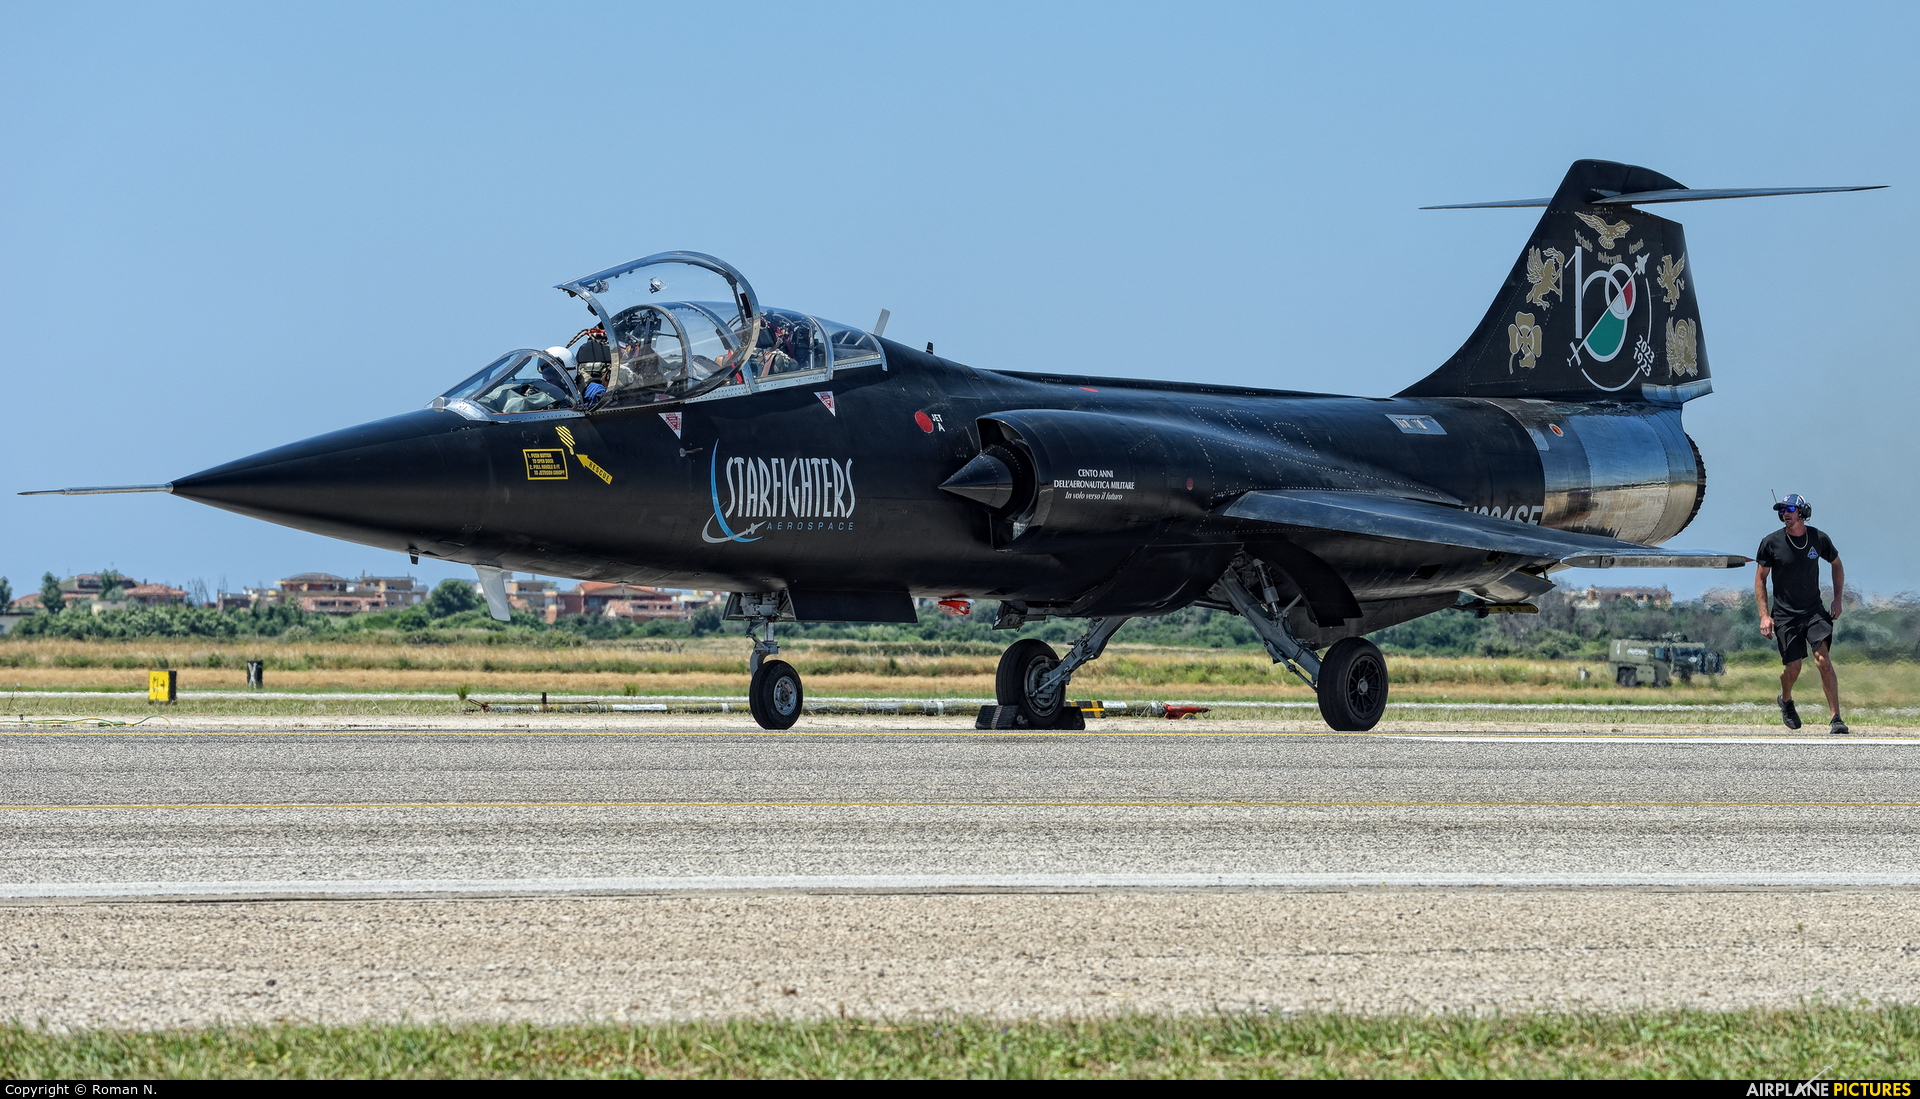 Starfighters Demo Team N991SF aircraft at Pratica di Mare